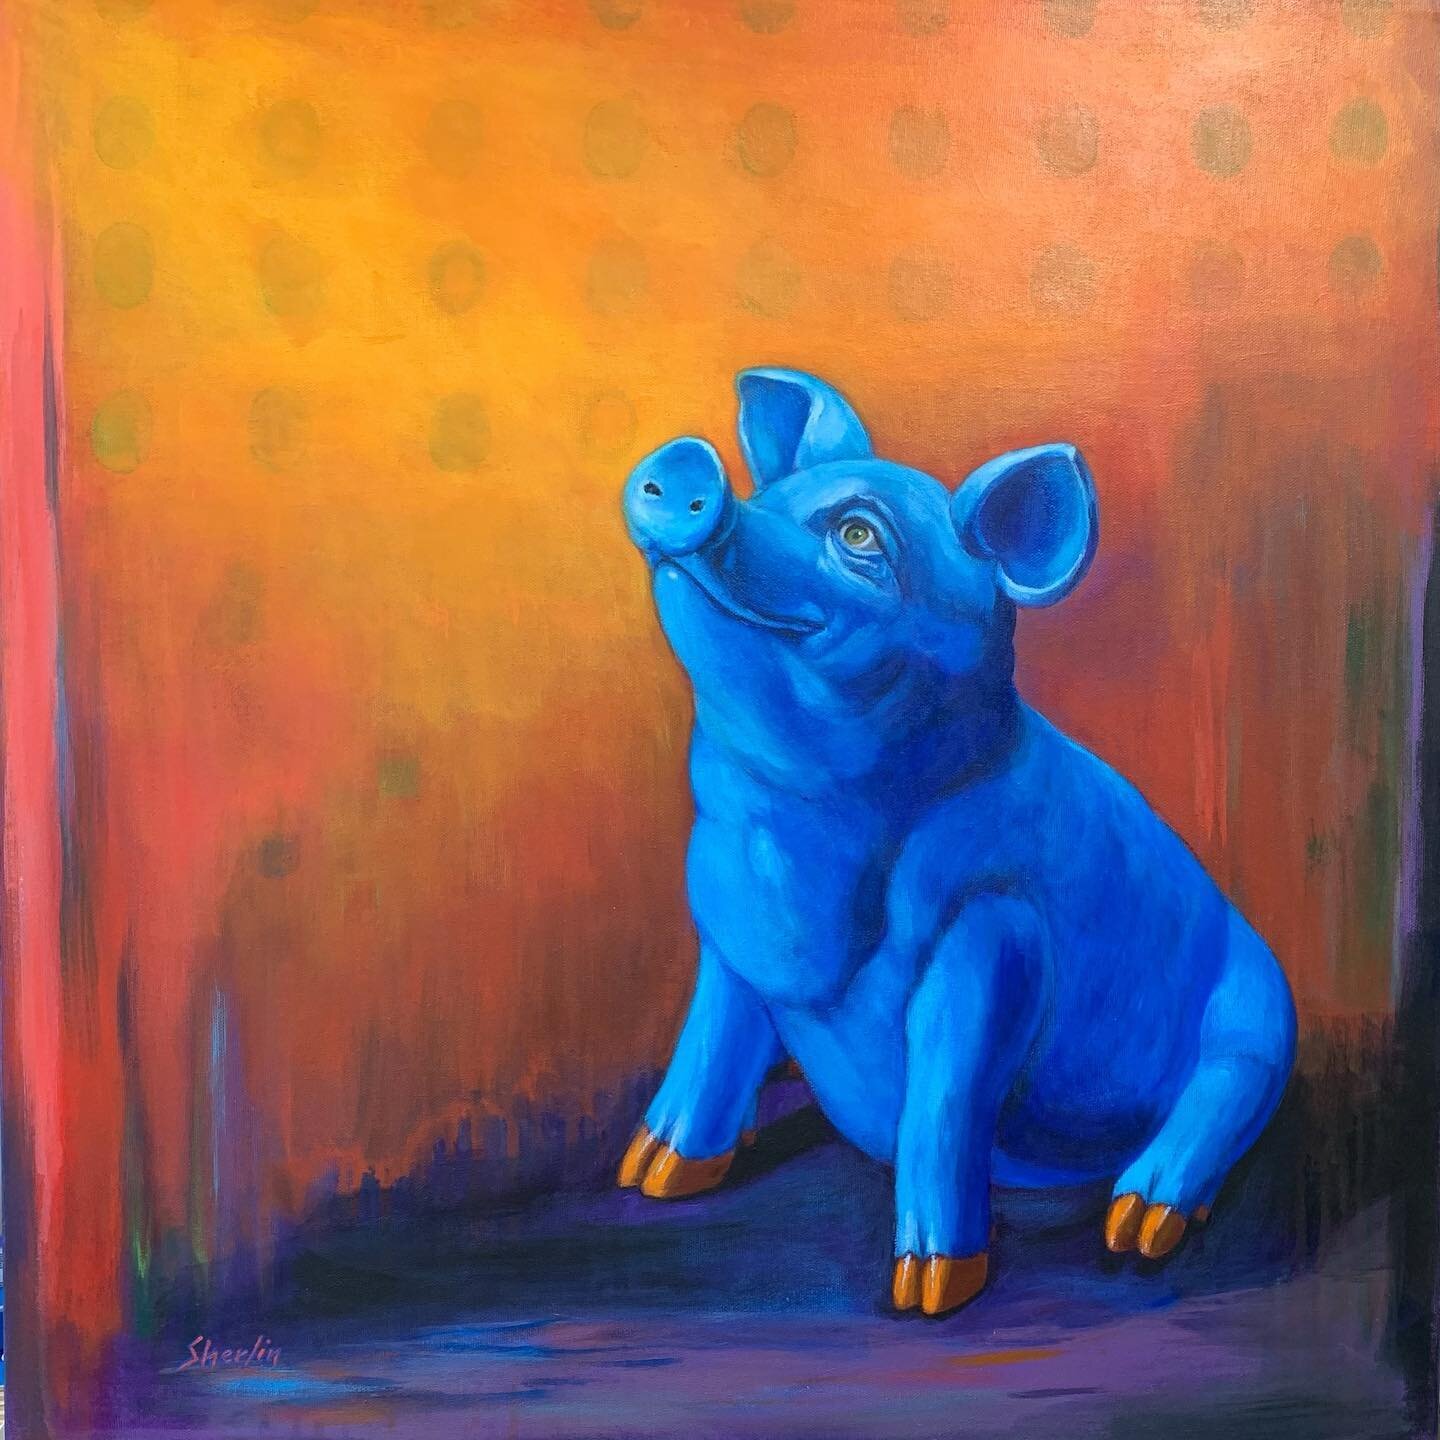 &ldquo;Needy Pig&rdquo; acrylic on canvas, 24 x 24 inches 

#artist_alliance_com #Jen ToughGallery #paintingartists #contemporarypainters #figurativeartists #artdiscover #artlovers #artstudio #artsy #bcartist #kootenaylife #nelsonkootenaylaketourism 